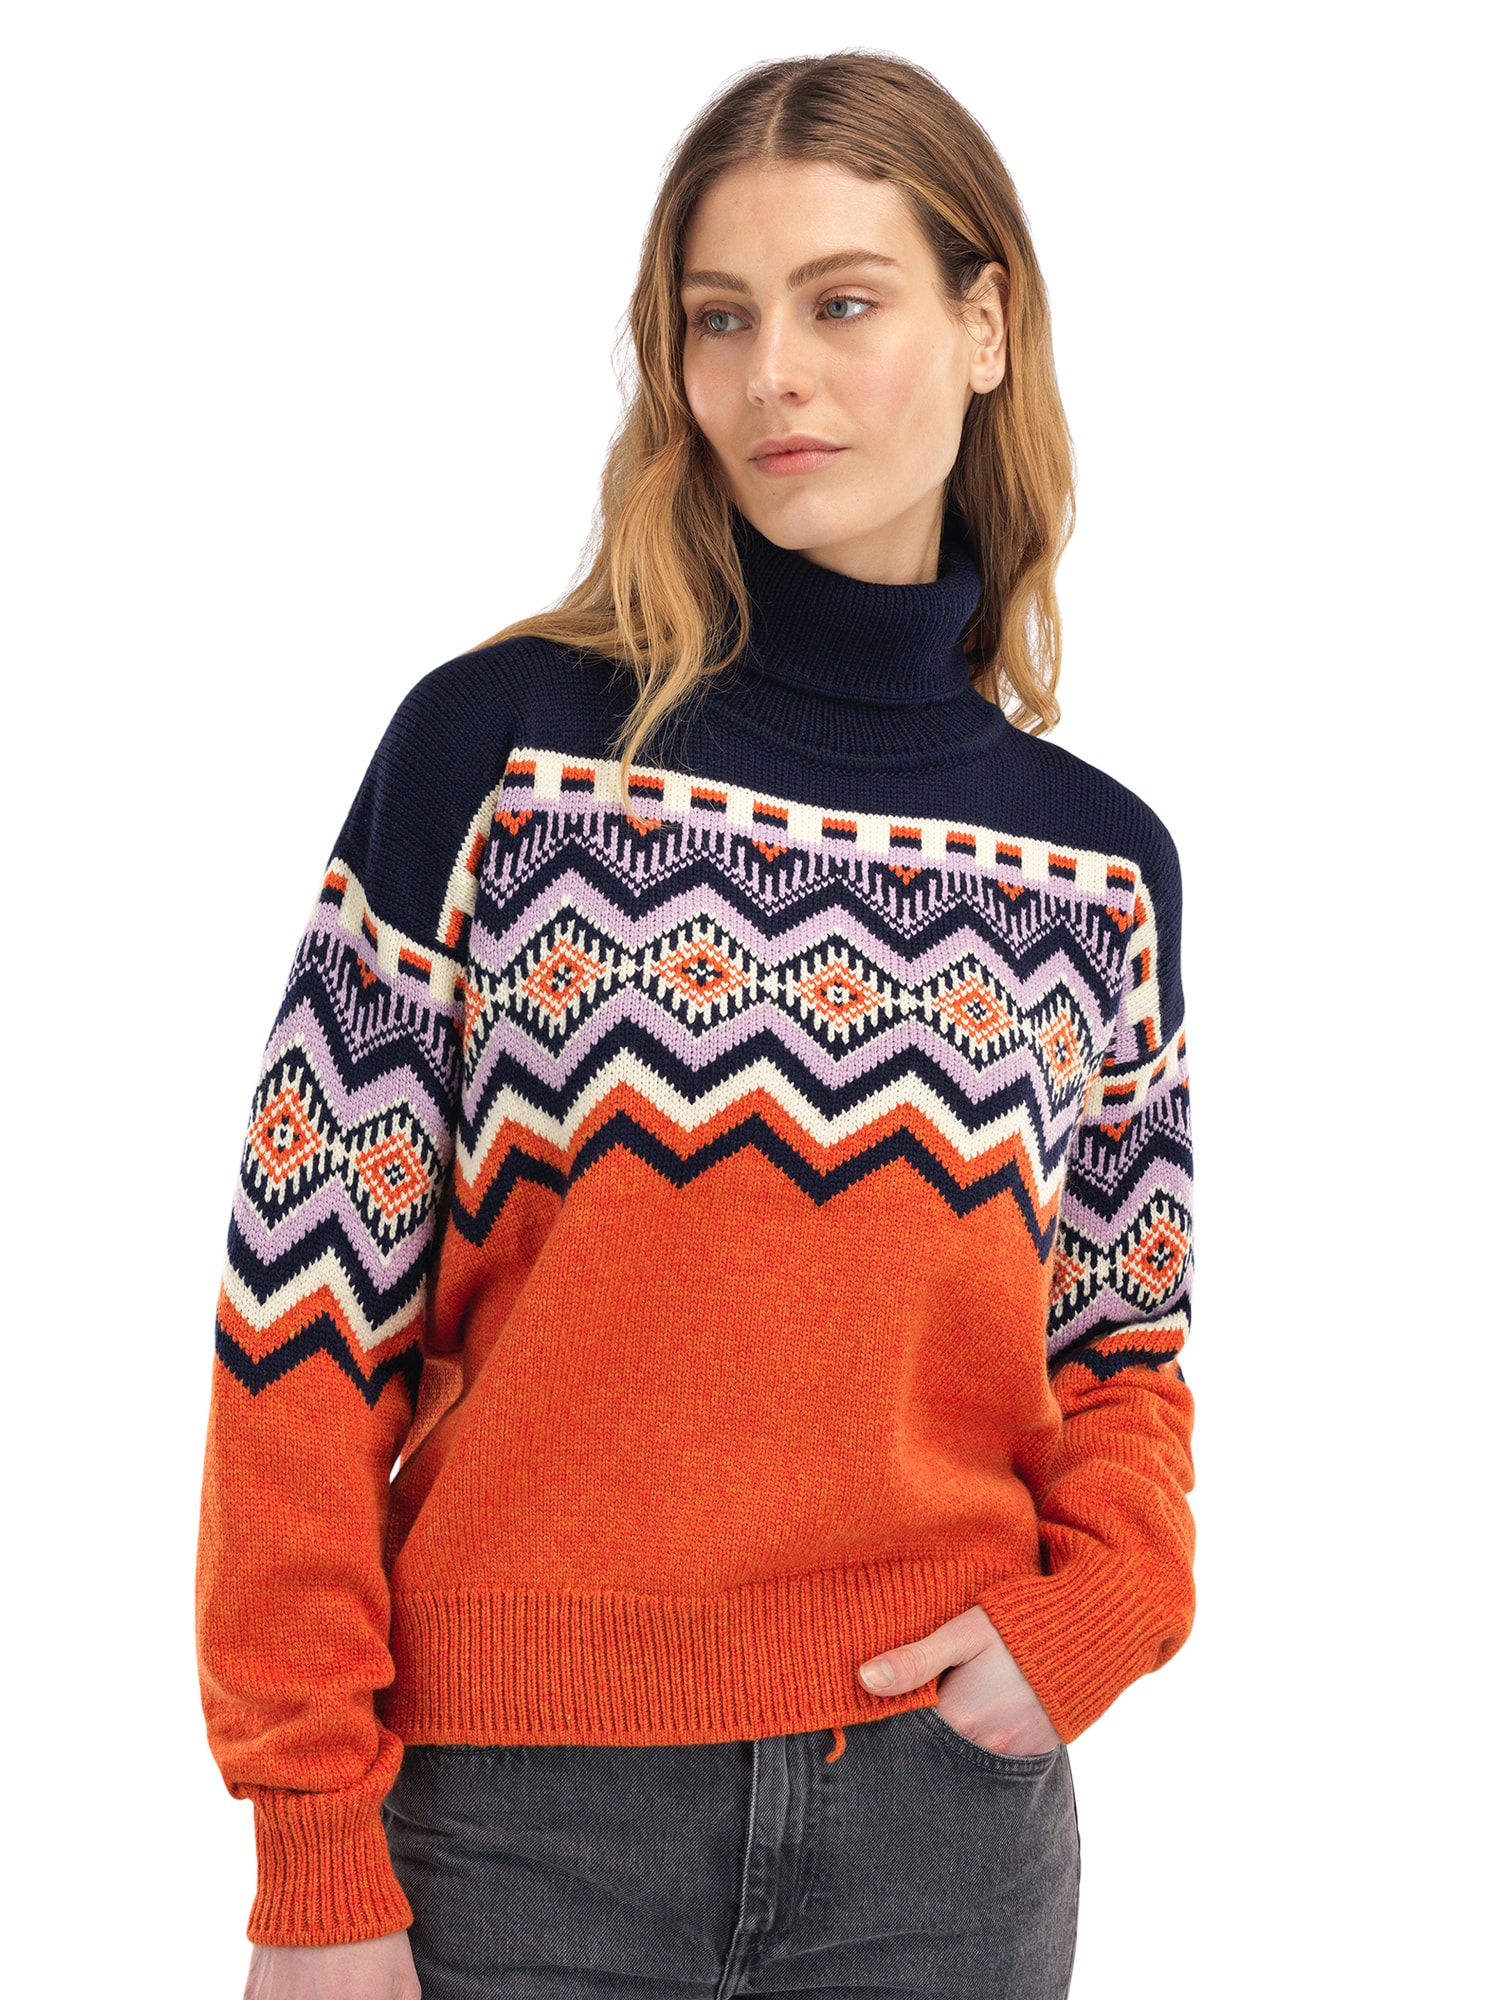 Randaberg Sweater - Women - Orange - Dale of Norway - Dale of Norway